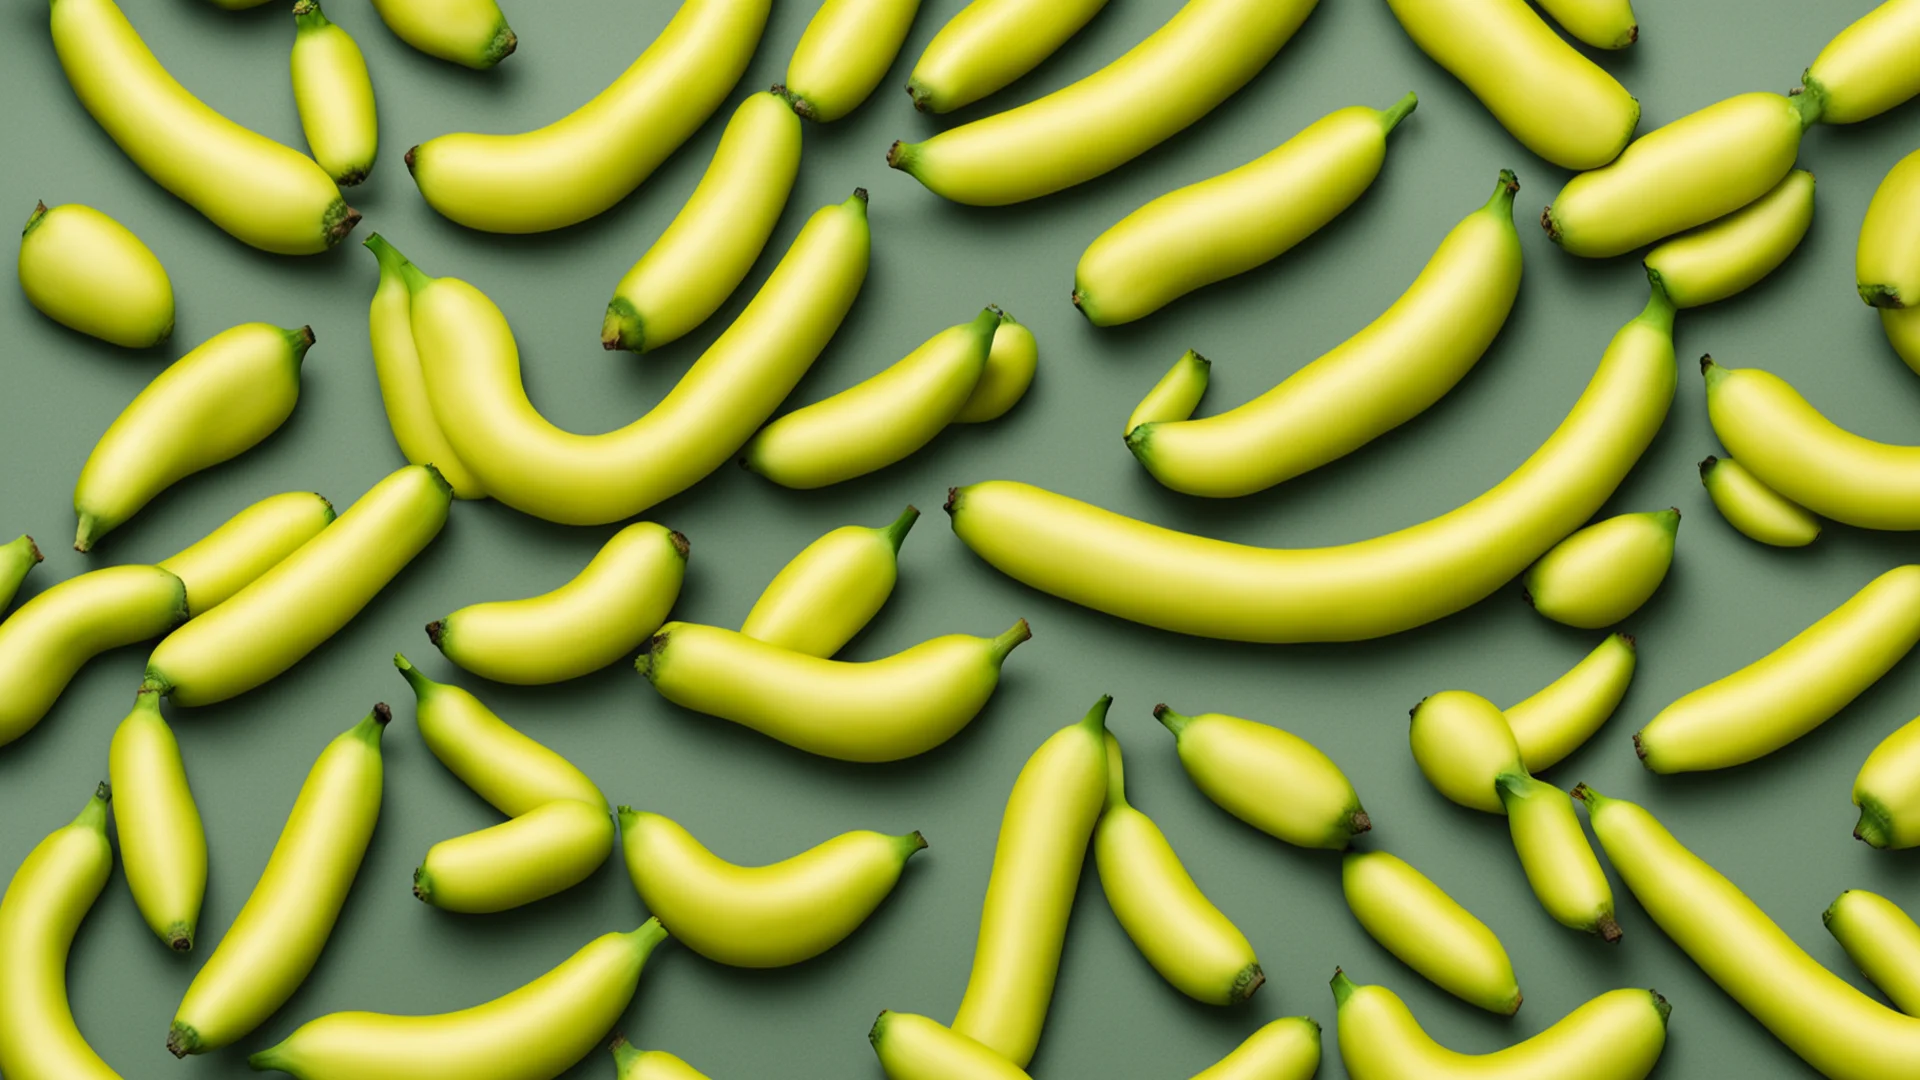 google images website of bananas  wide